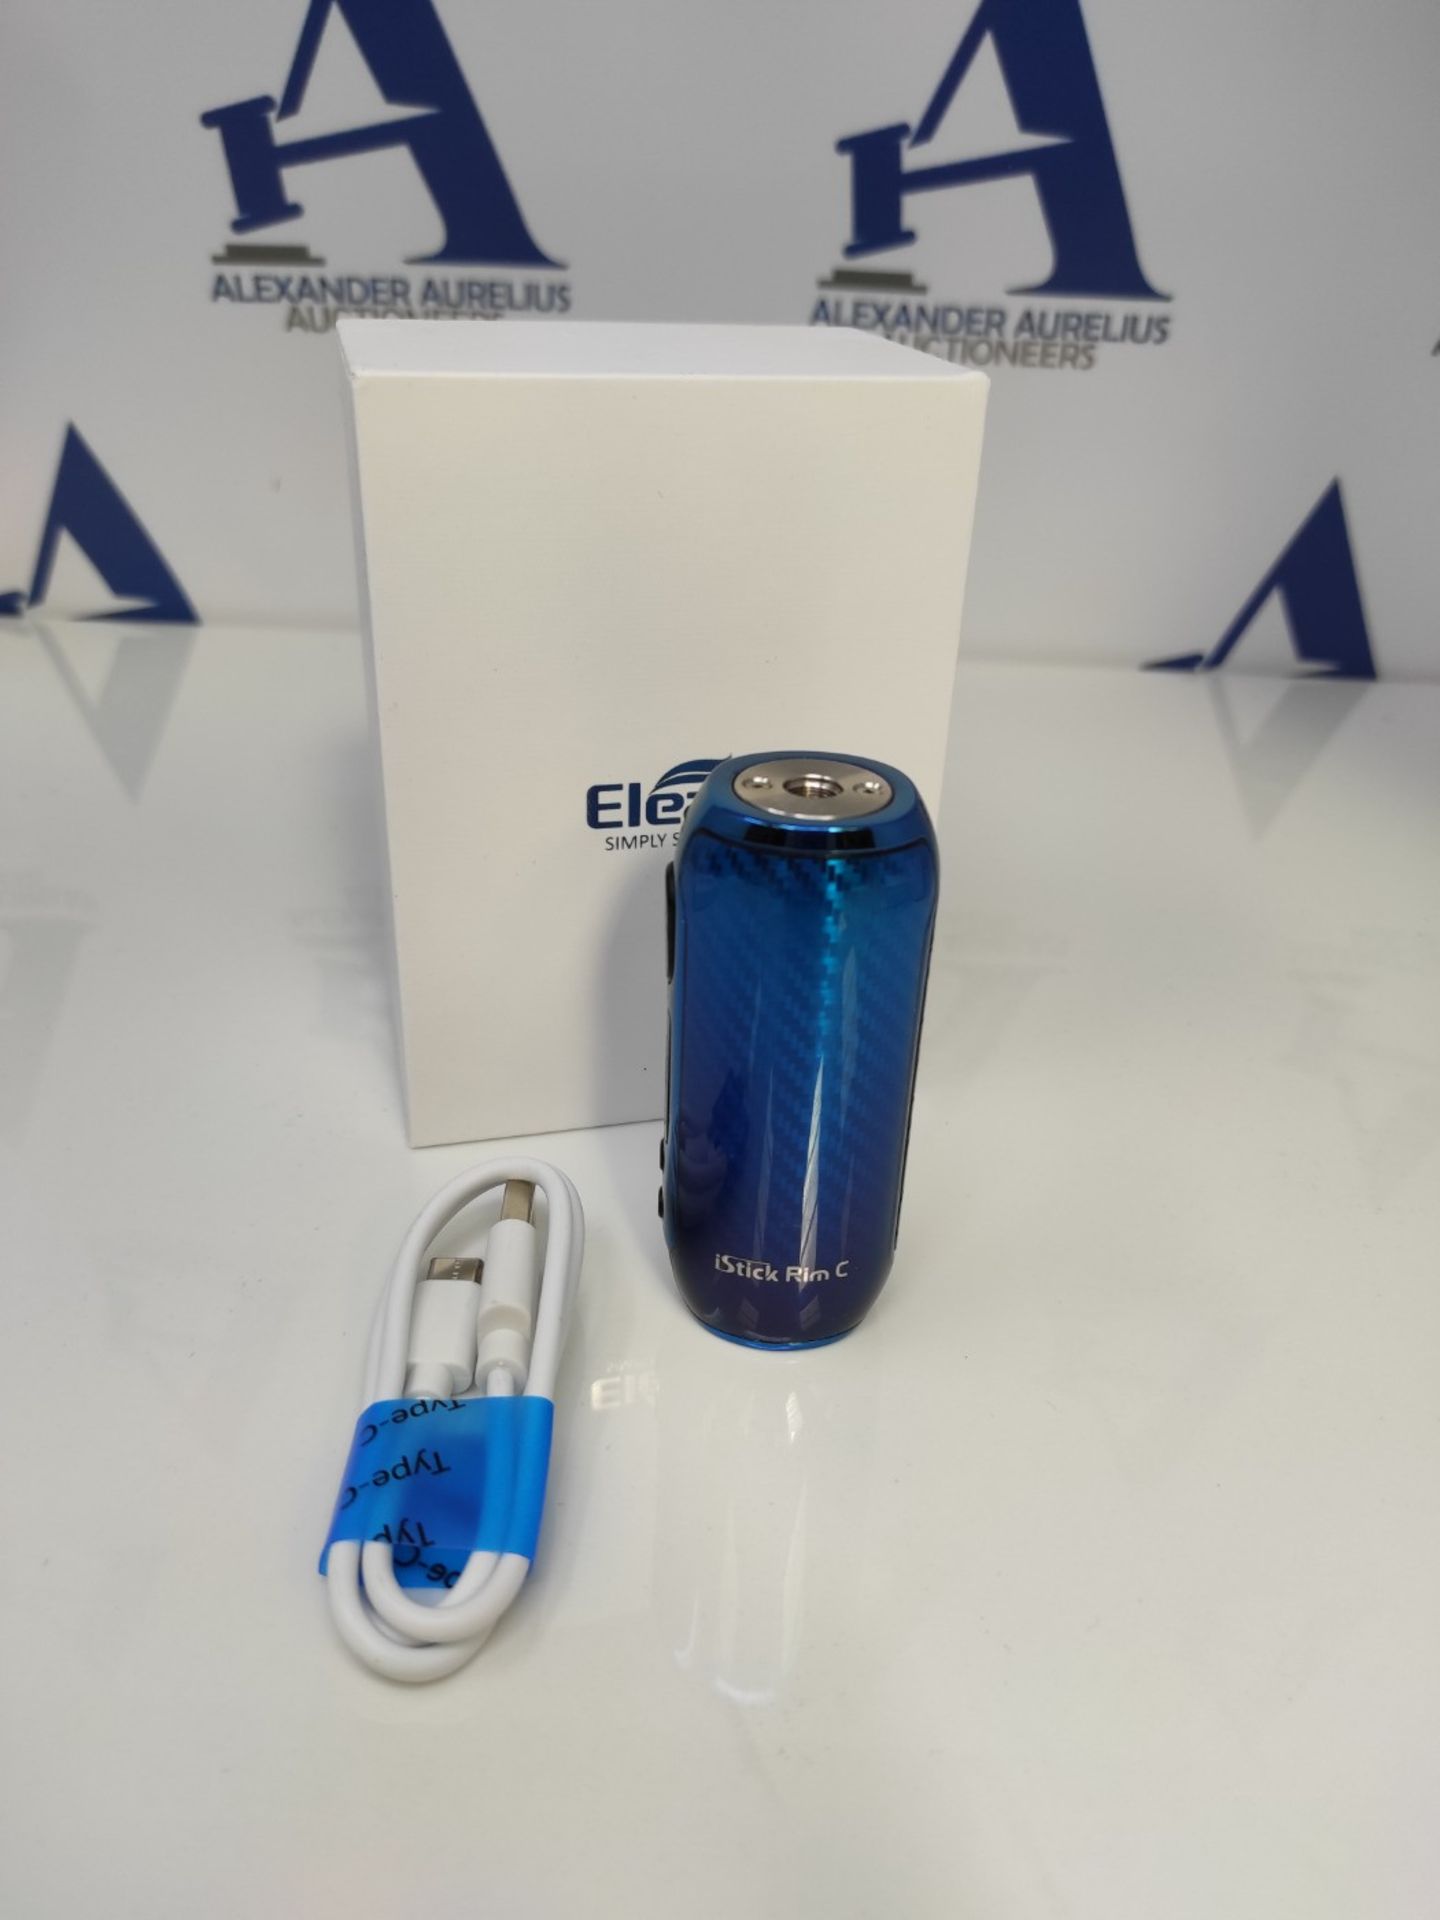 Eleaf iStick Rim C Box Mod 80 W, e-cigarette battery carrier, gradient blue (0.0 mg ni - Image 3 of 3